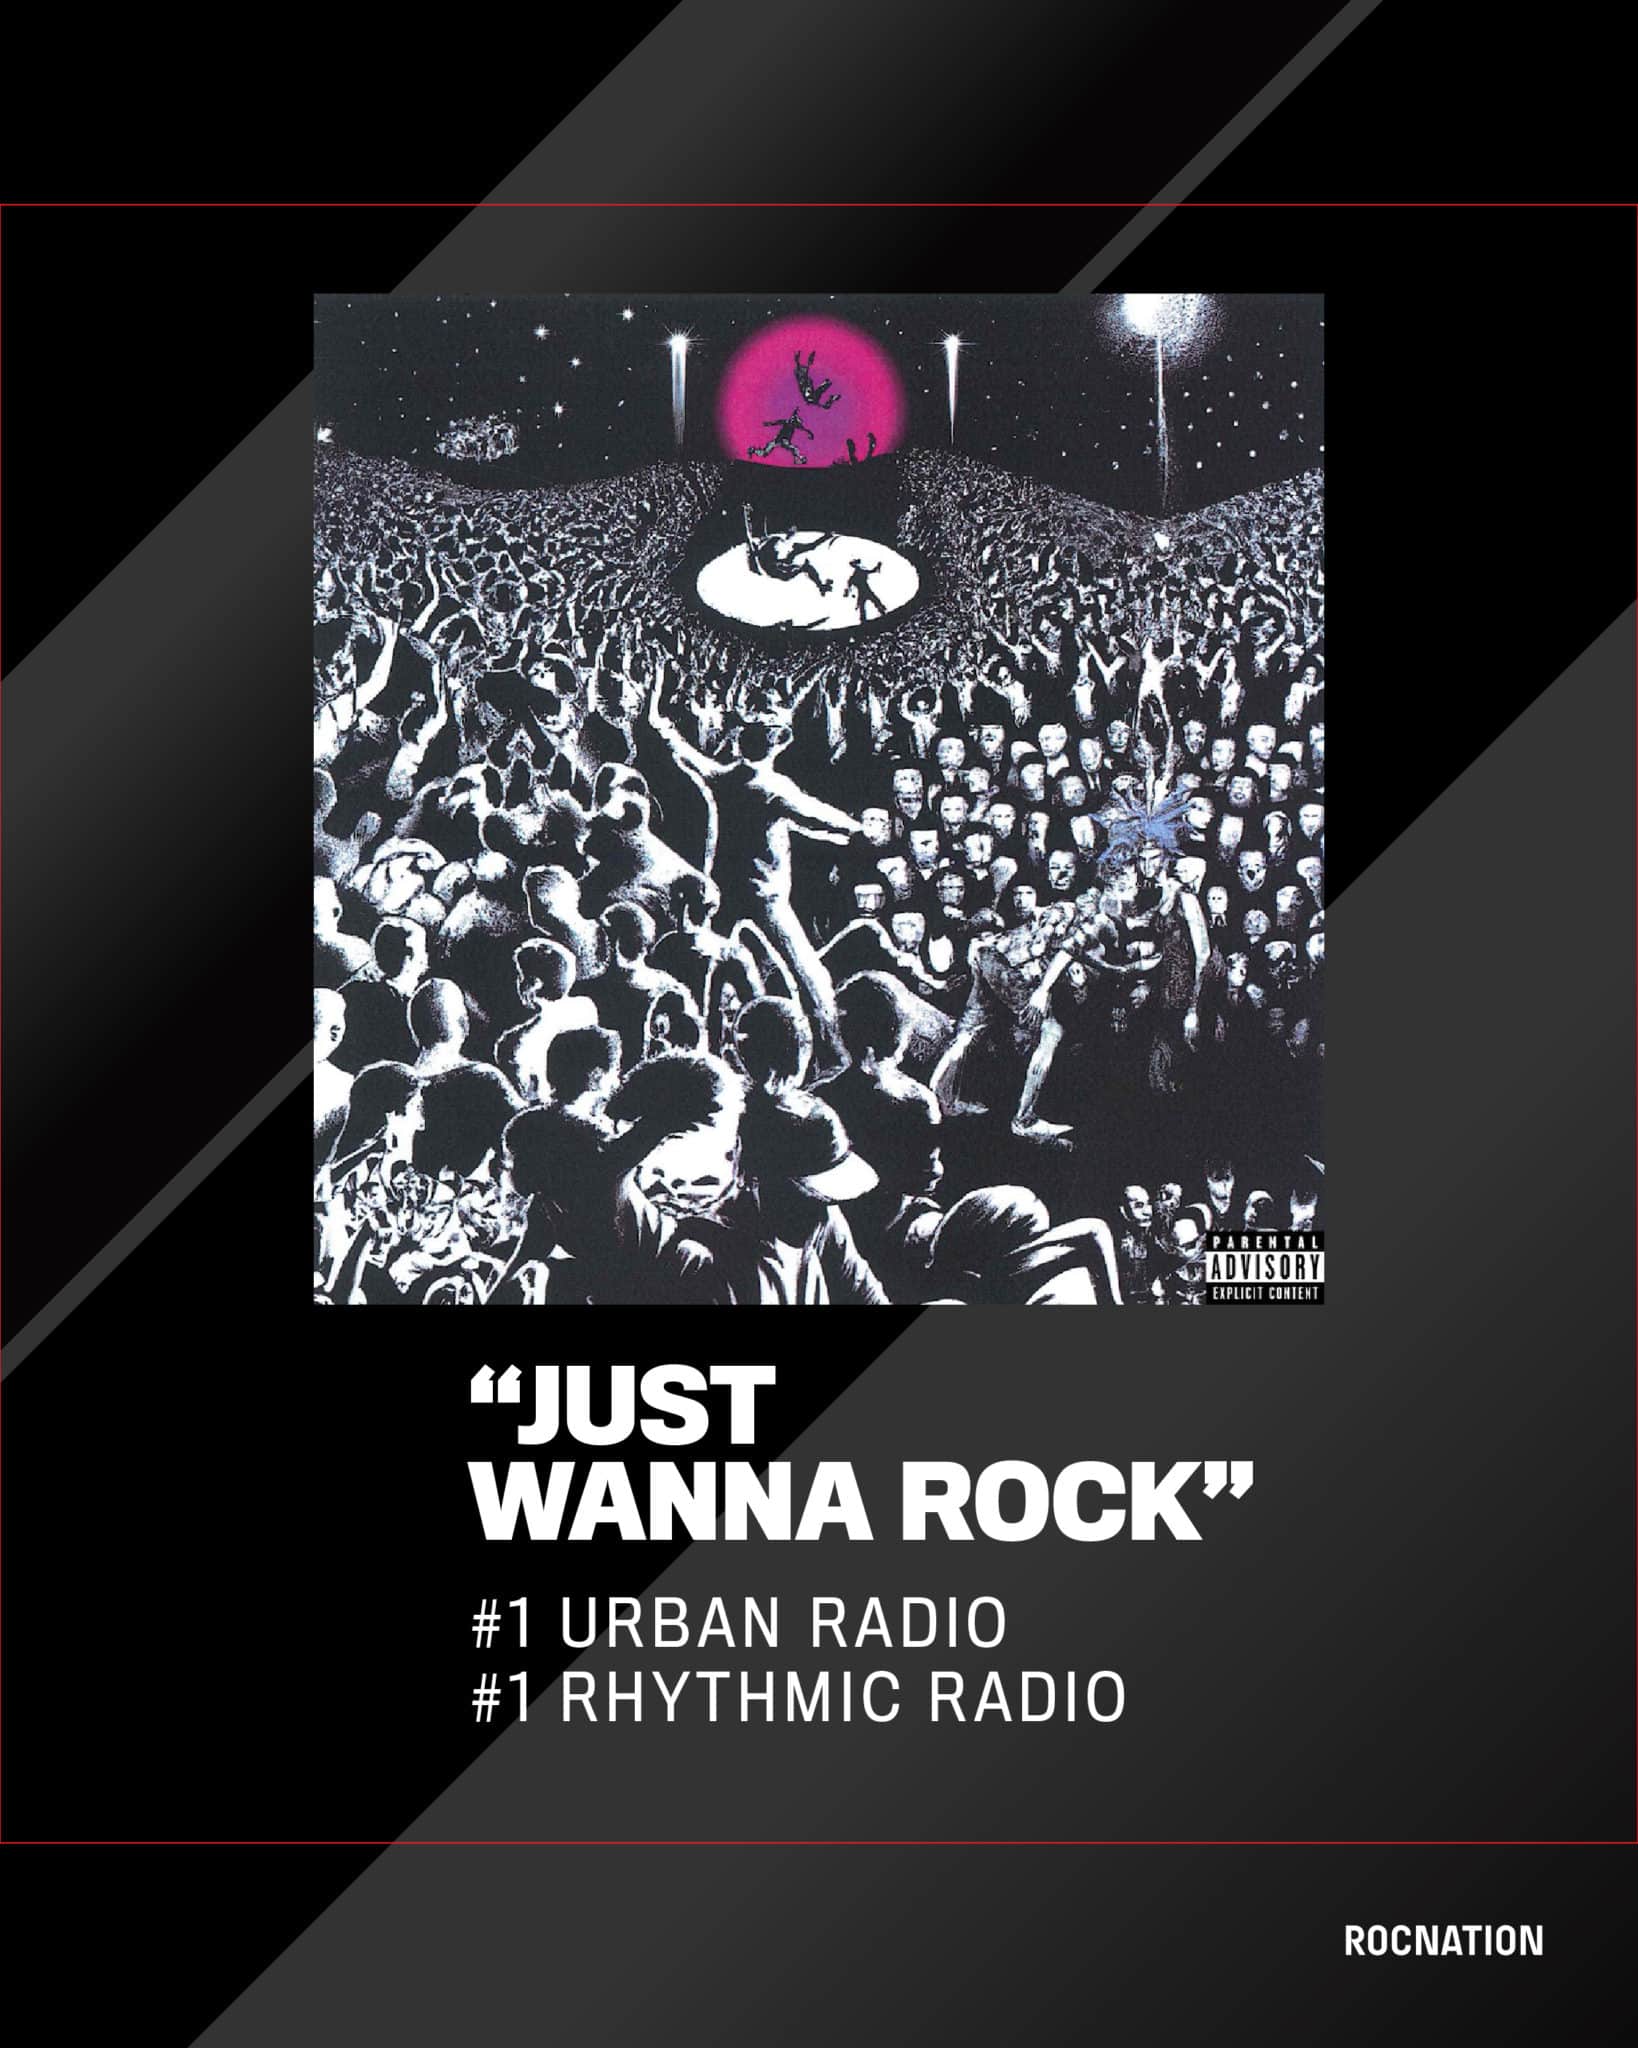 “Just Wanna Rock" by Lil Uzi Vert reaches #1 at US Urban and Rhythmic Radio!